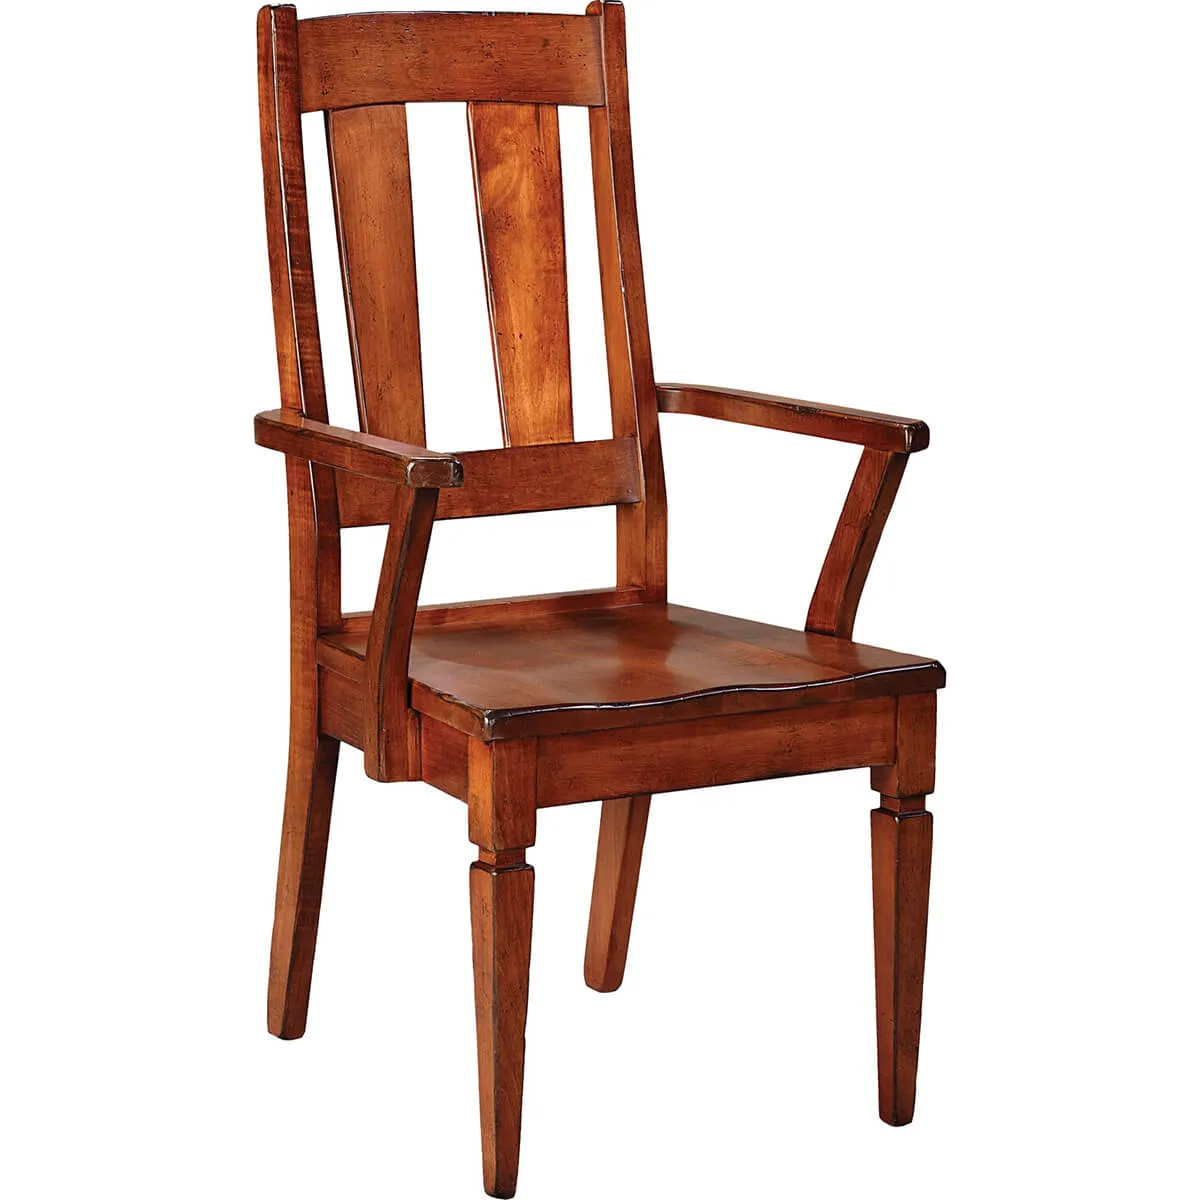 Provence Arm Chair